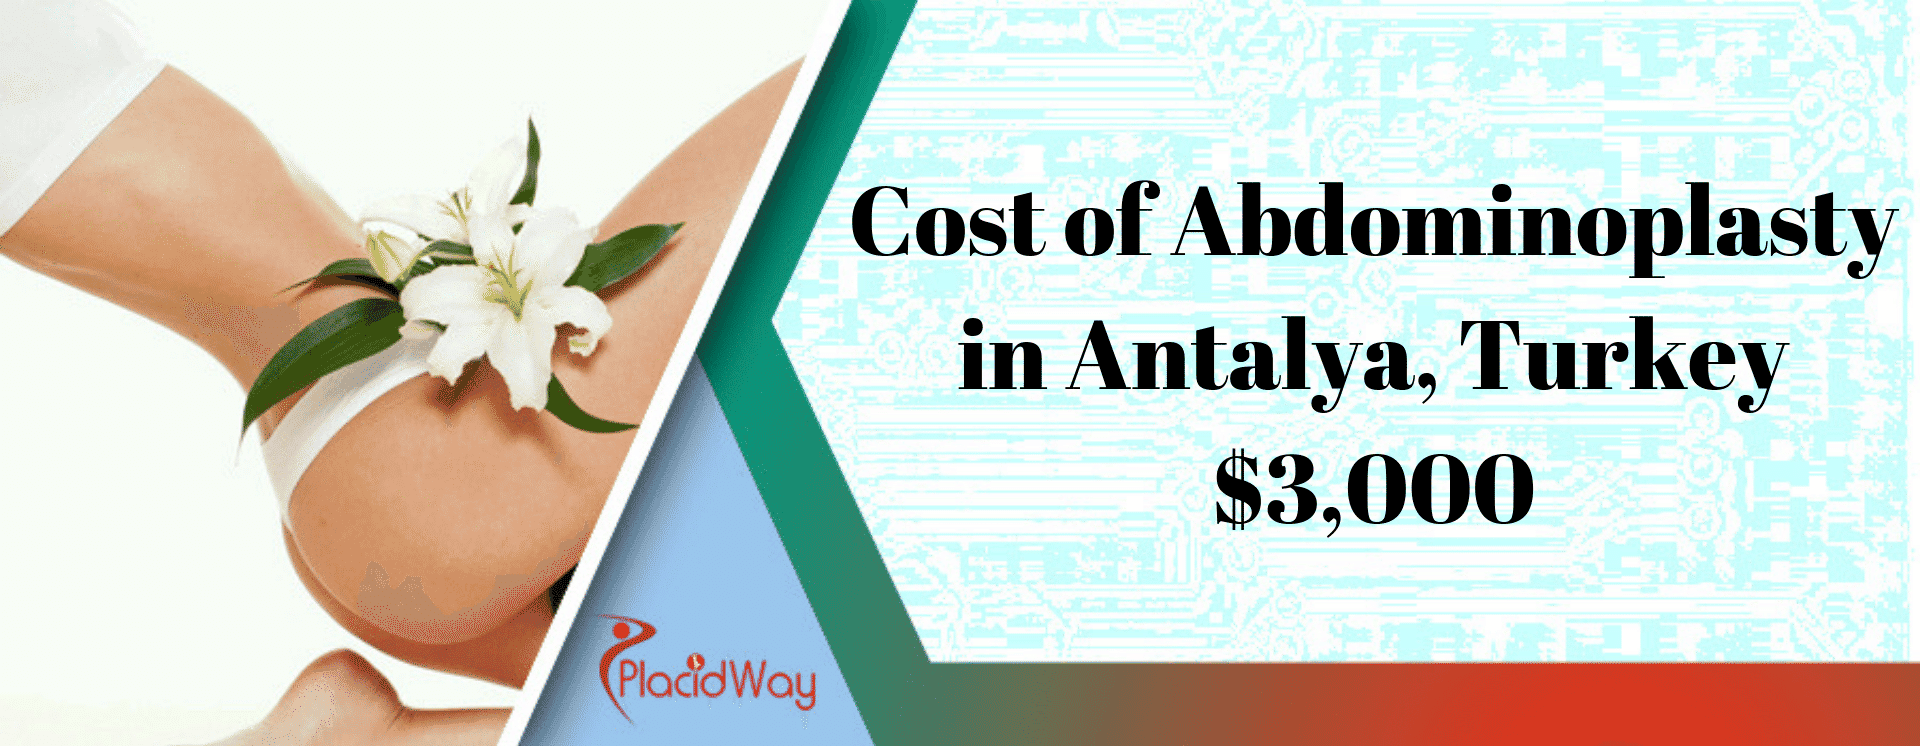 Cost of Abdominoplasty in Antalya, Turkey